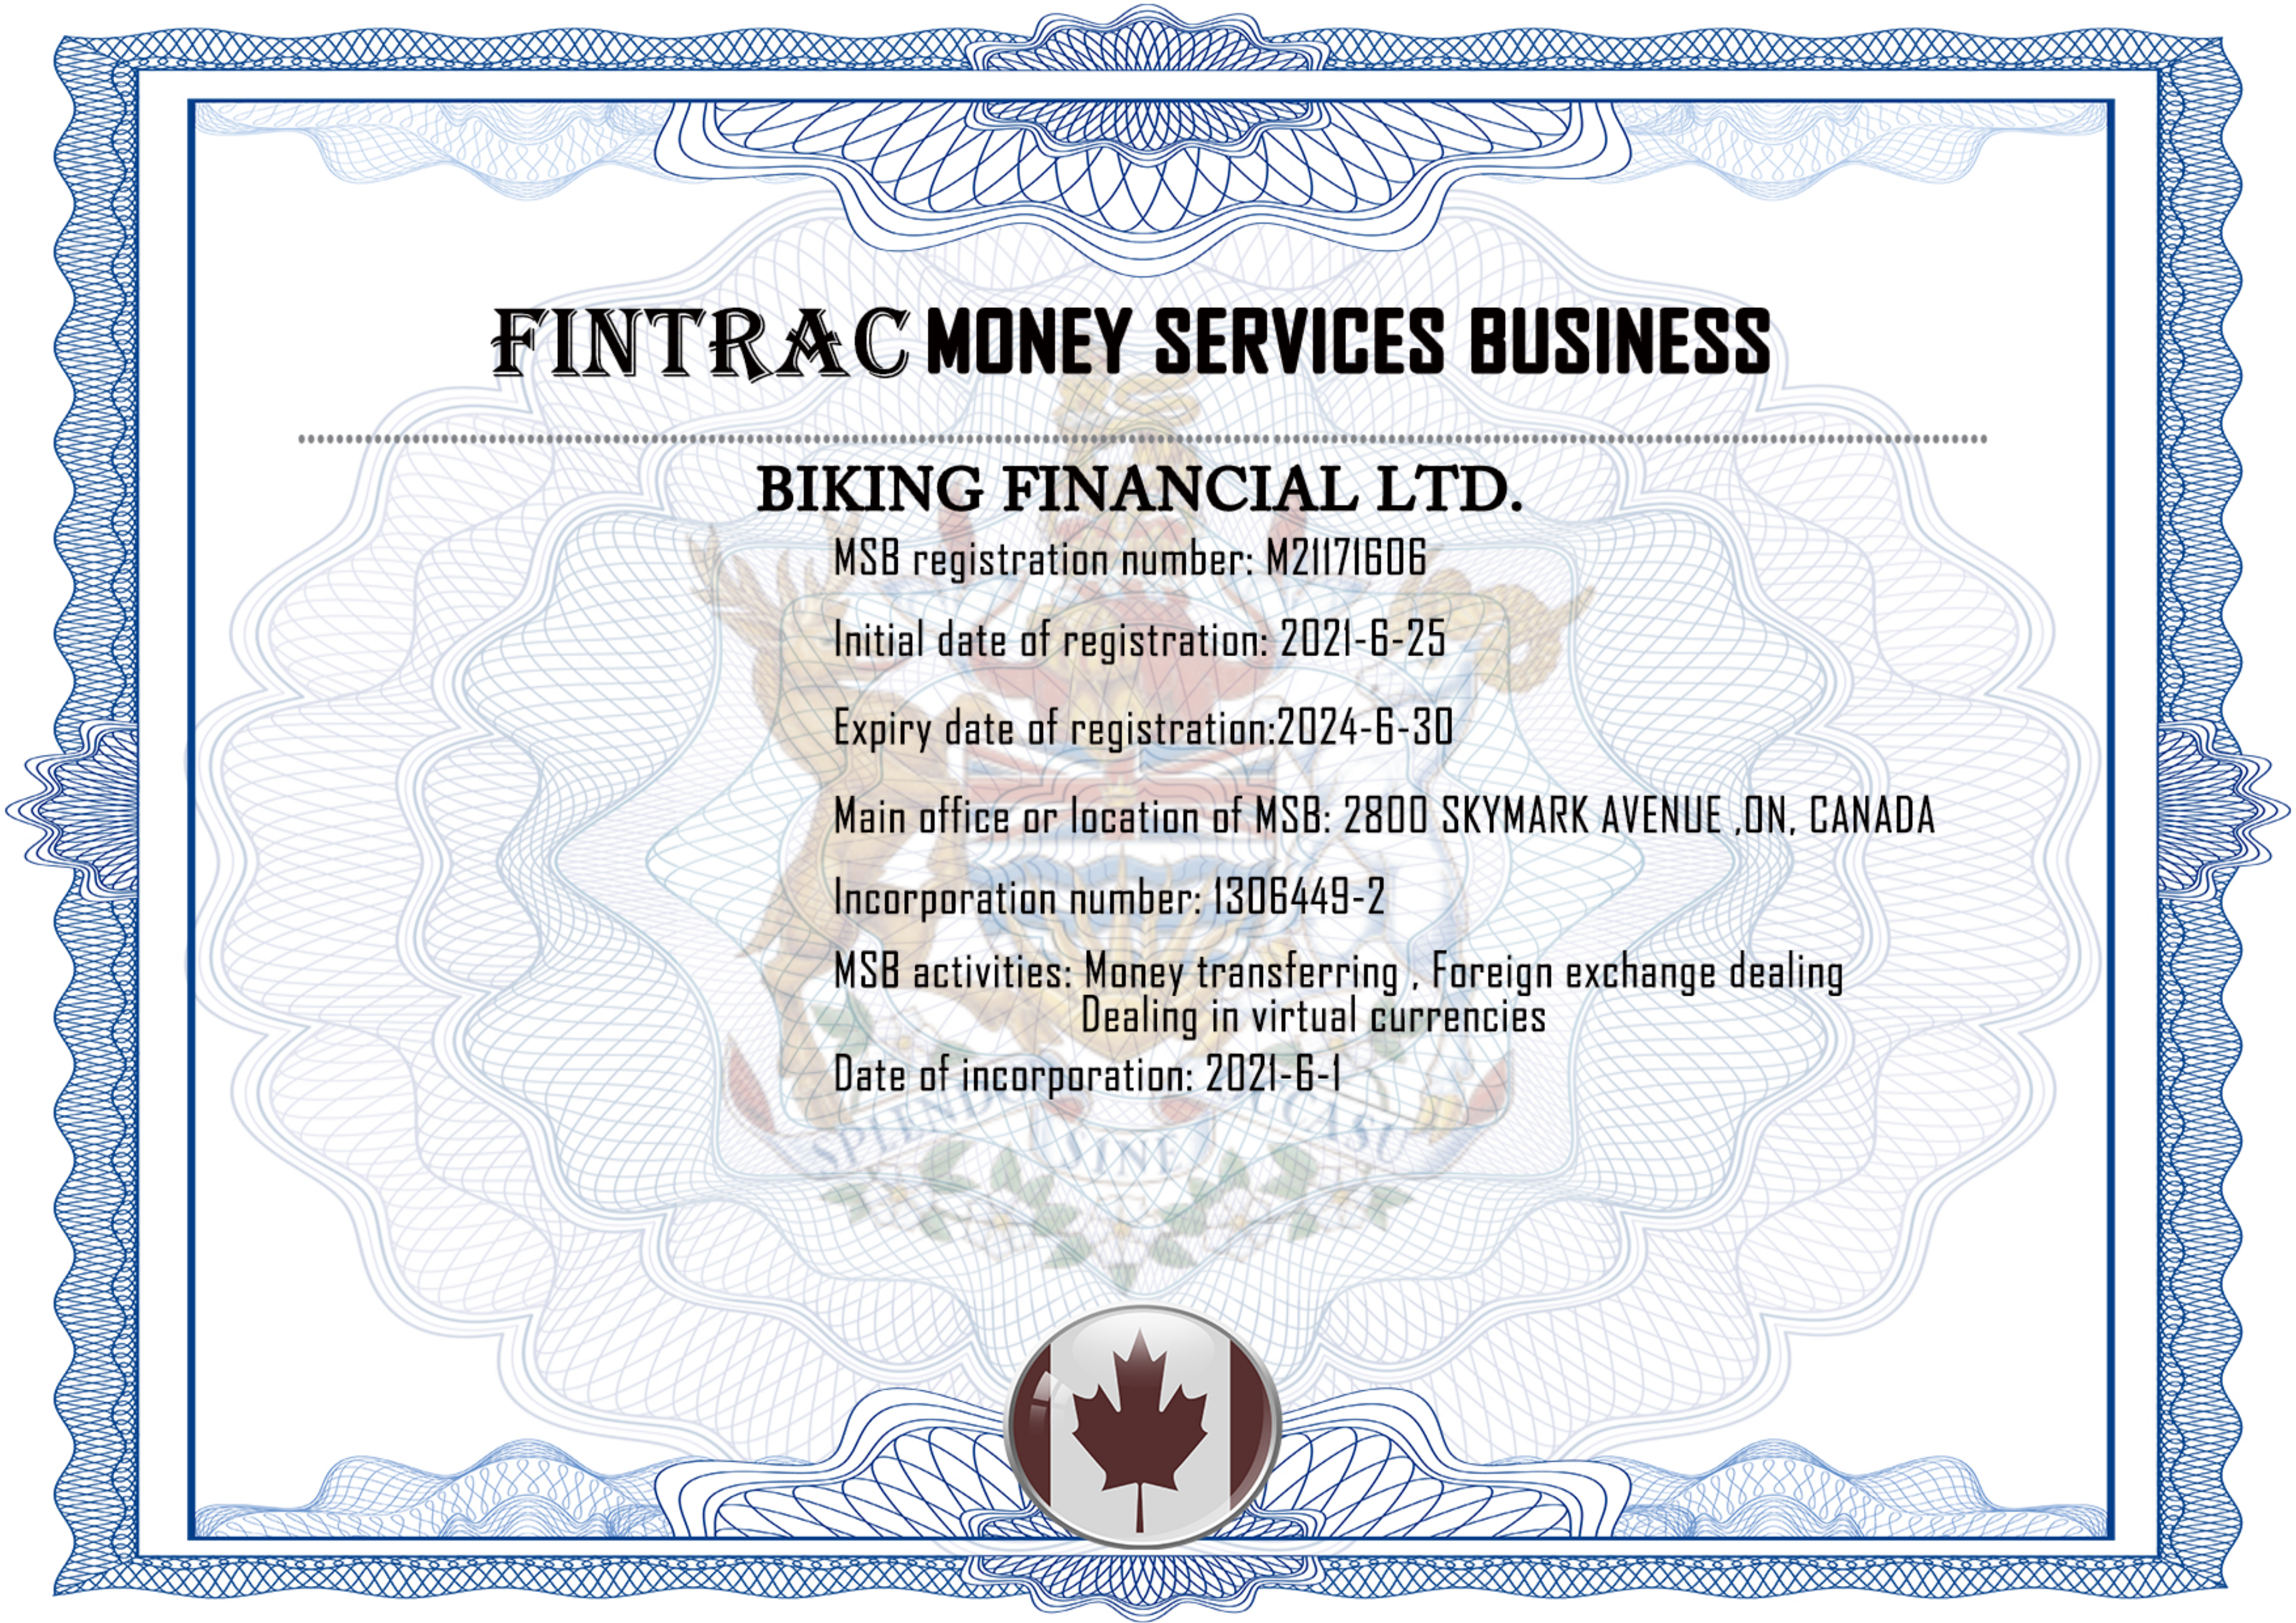 BIKING FINANCIAL LTD. (2)_00.png